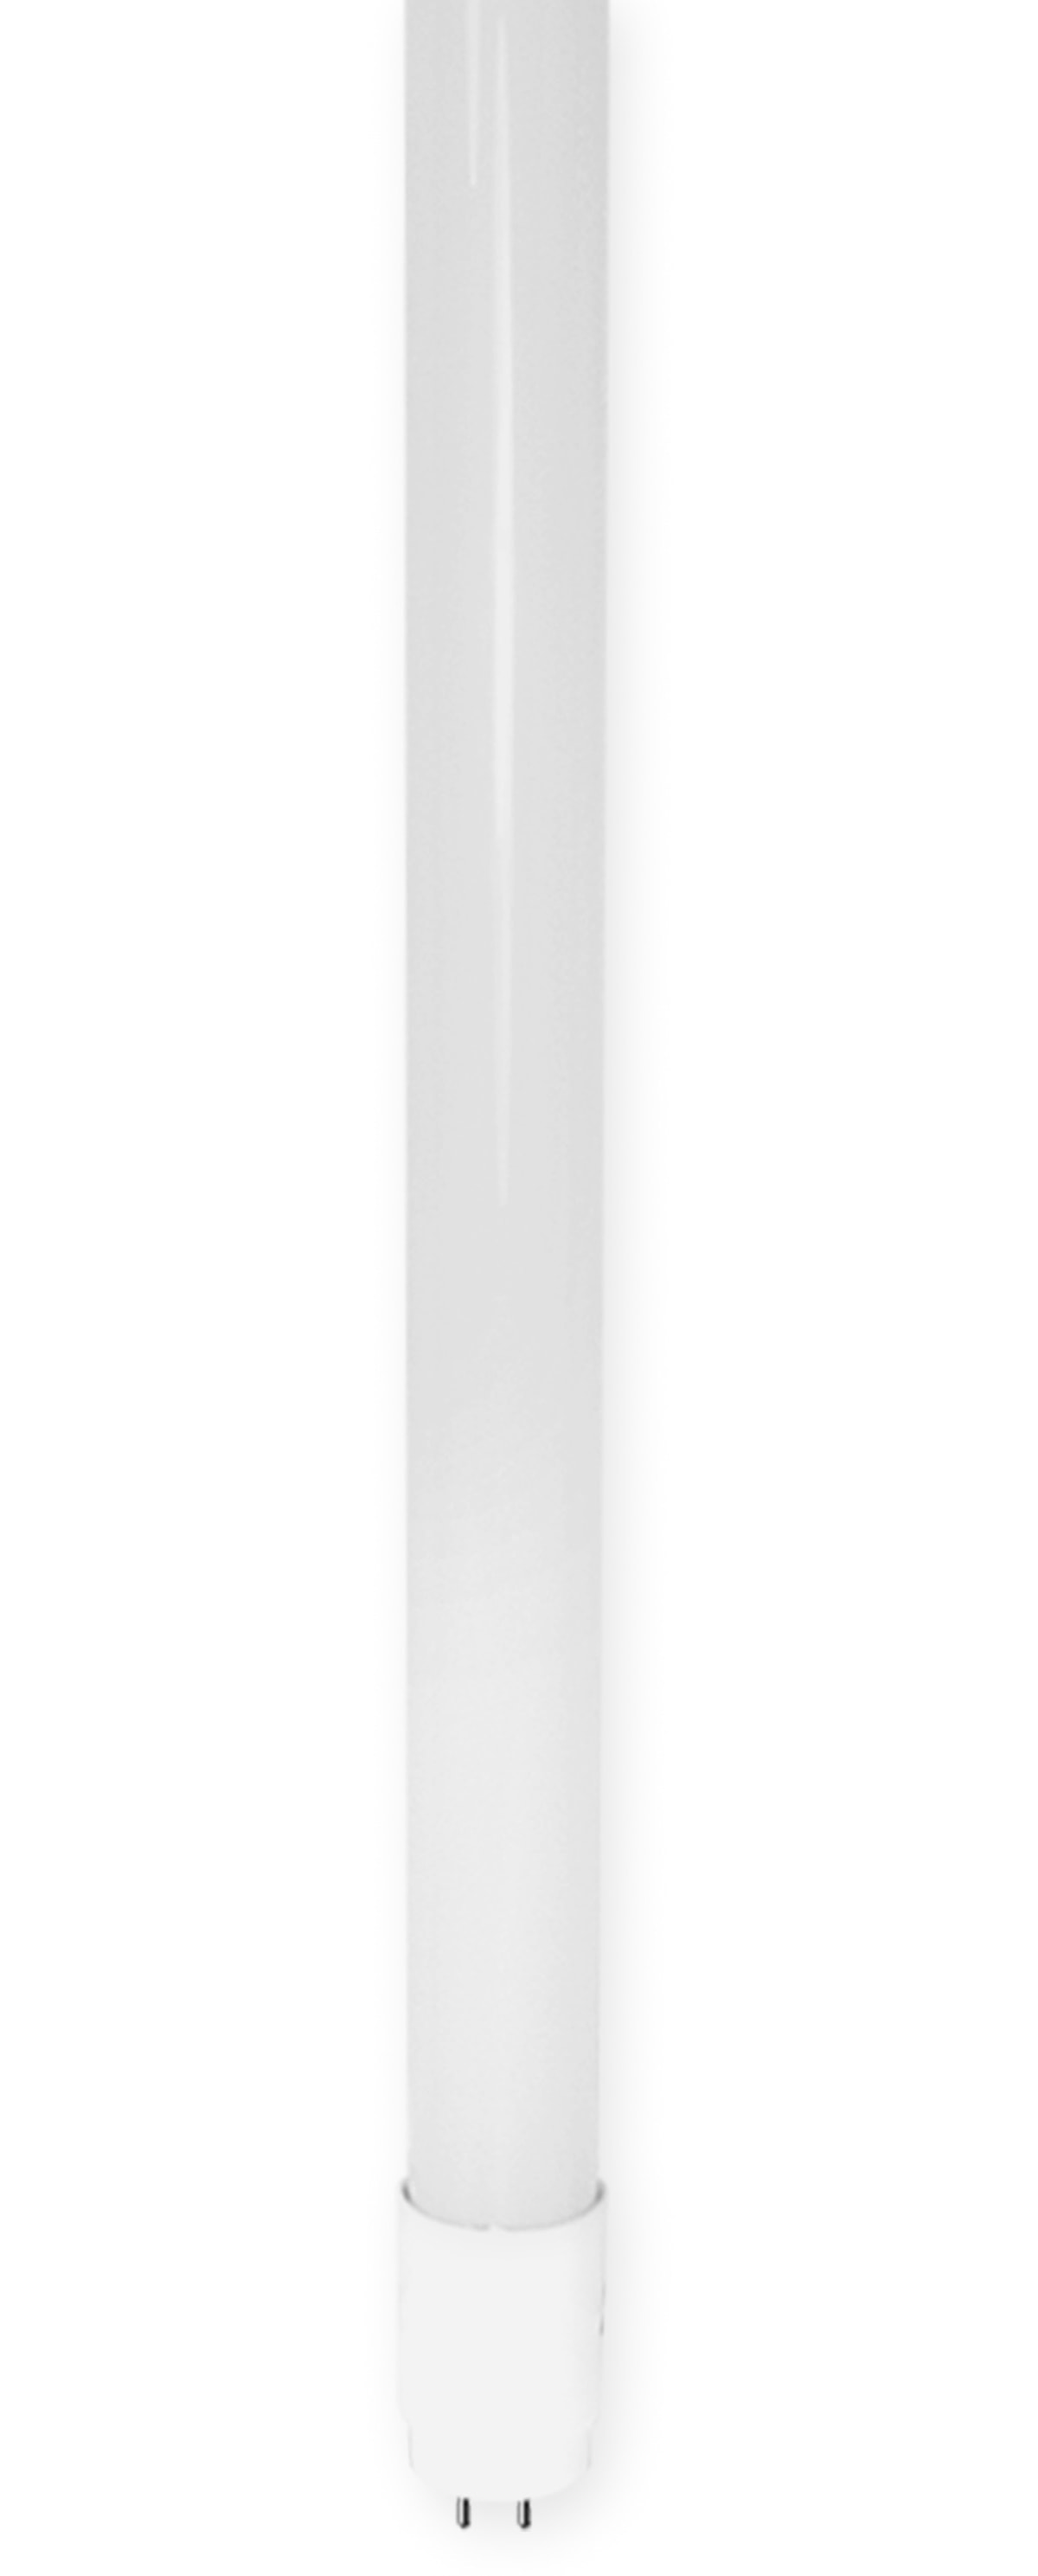 BLULAXA LED-Röhre 48198, EEK: F, 18 W, 1850 lm, G13, 4000 K, 120 cm